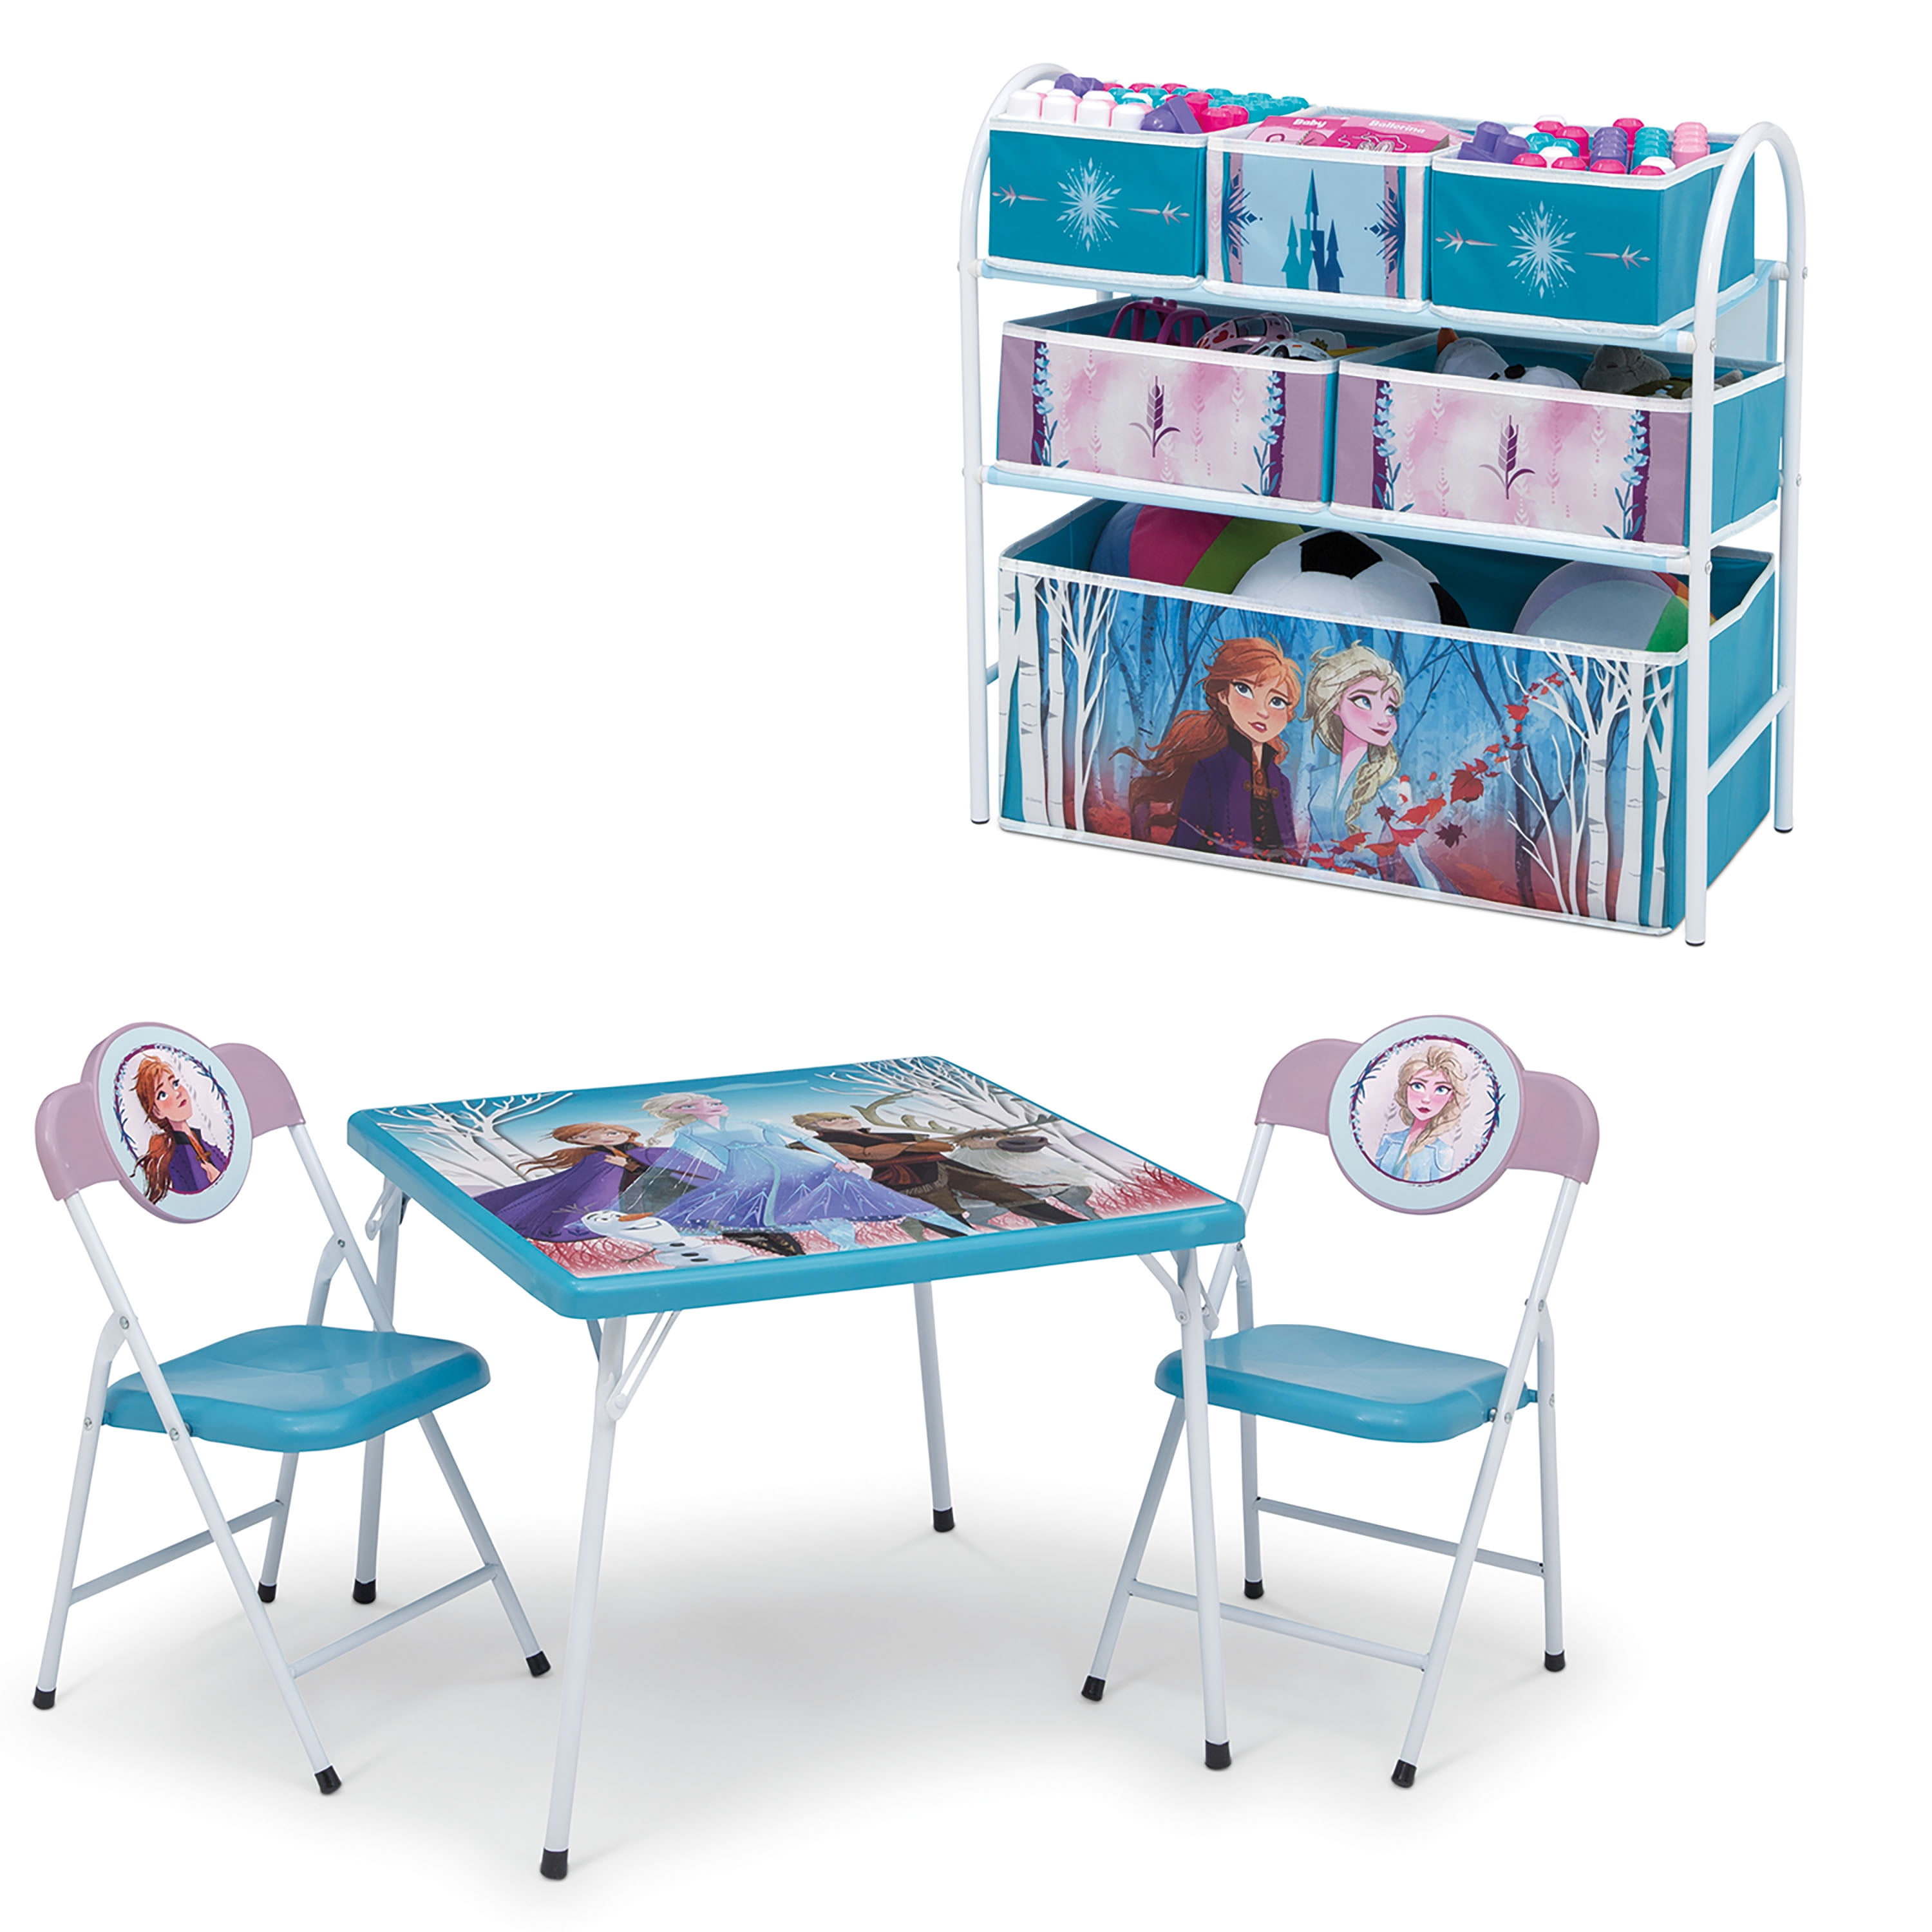 Disney Frozen 2 4Piece Toddler Playroom Set by Delta